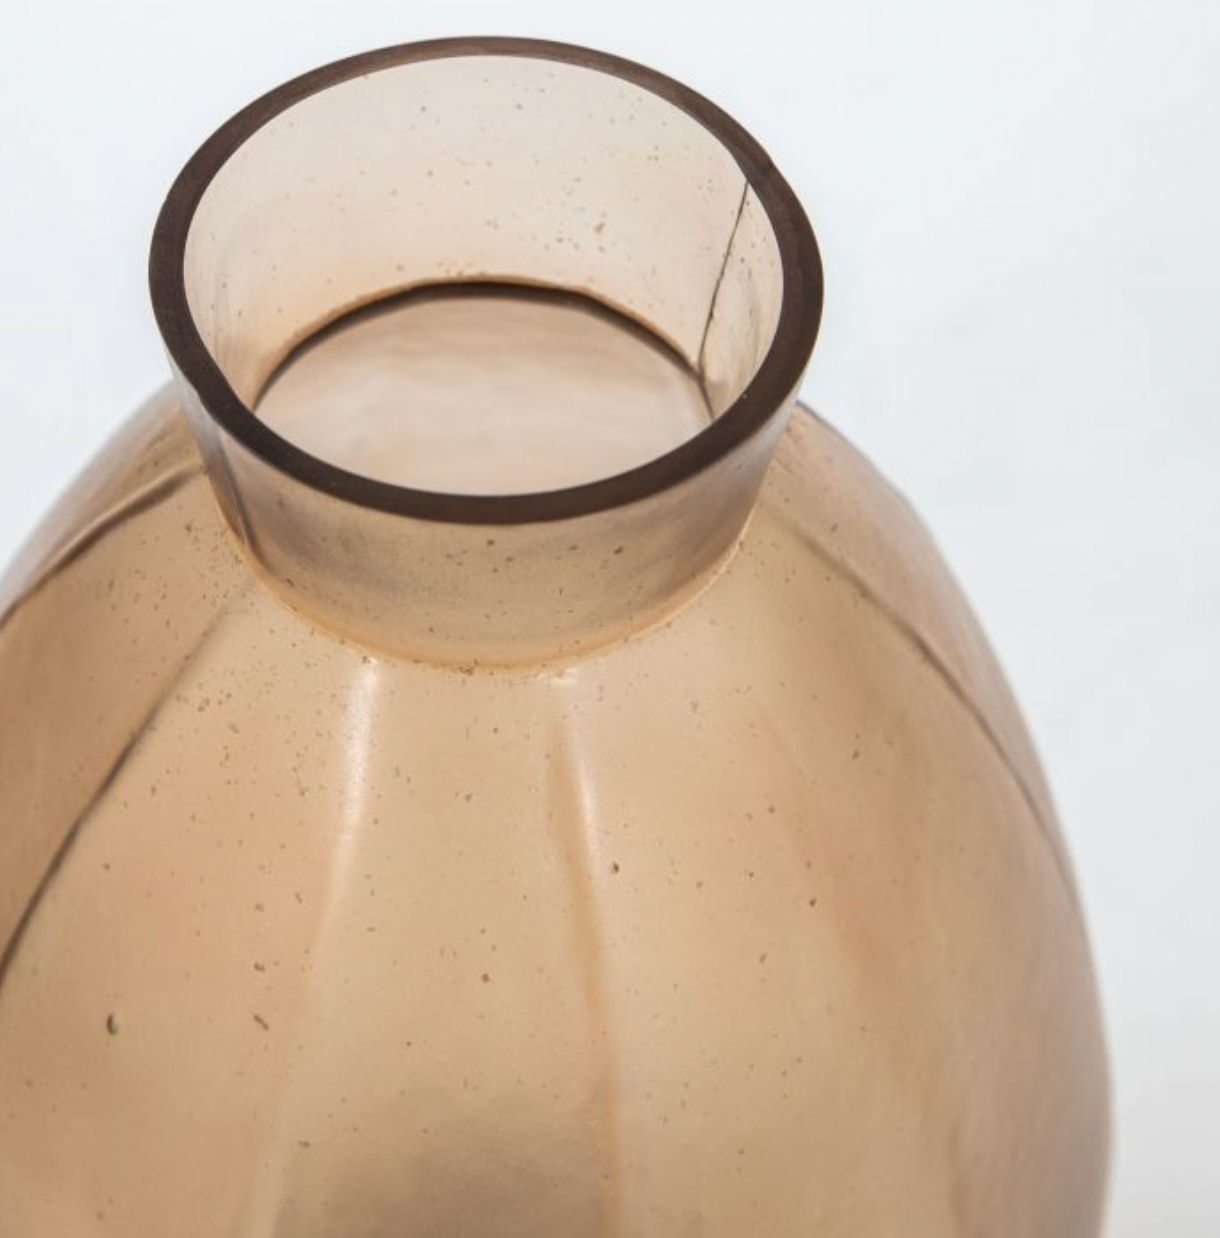 Glass Brown Arno Vase - Medium